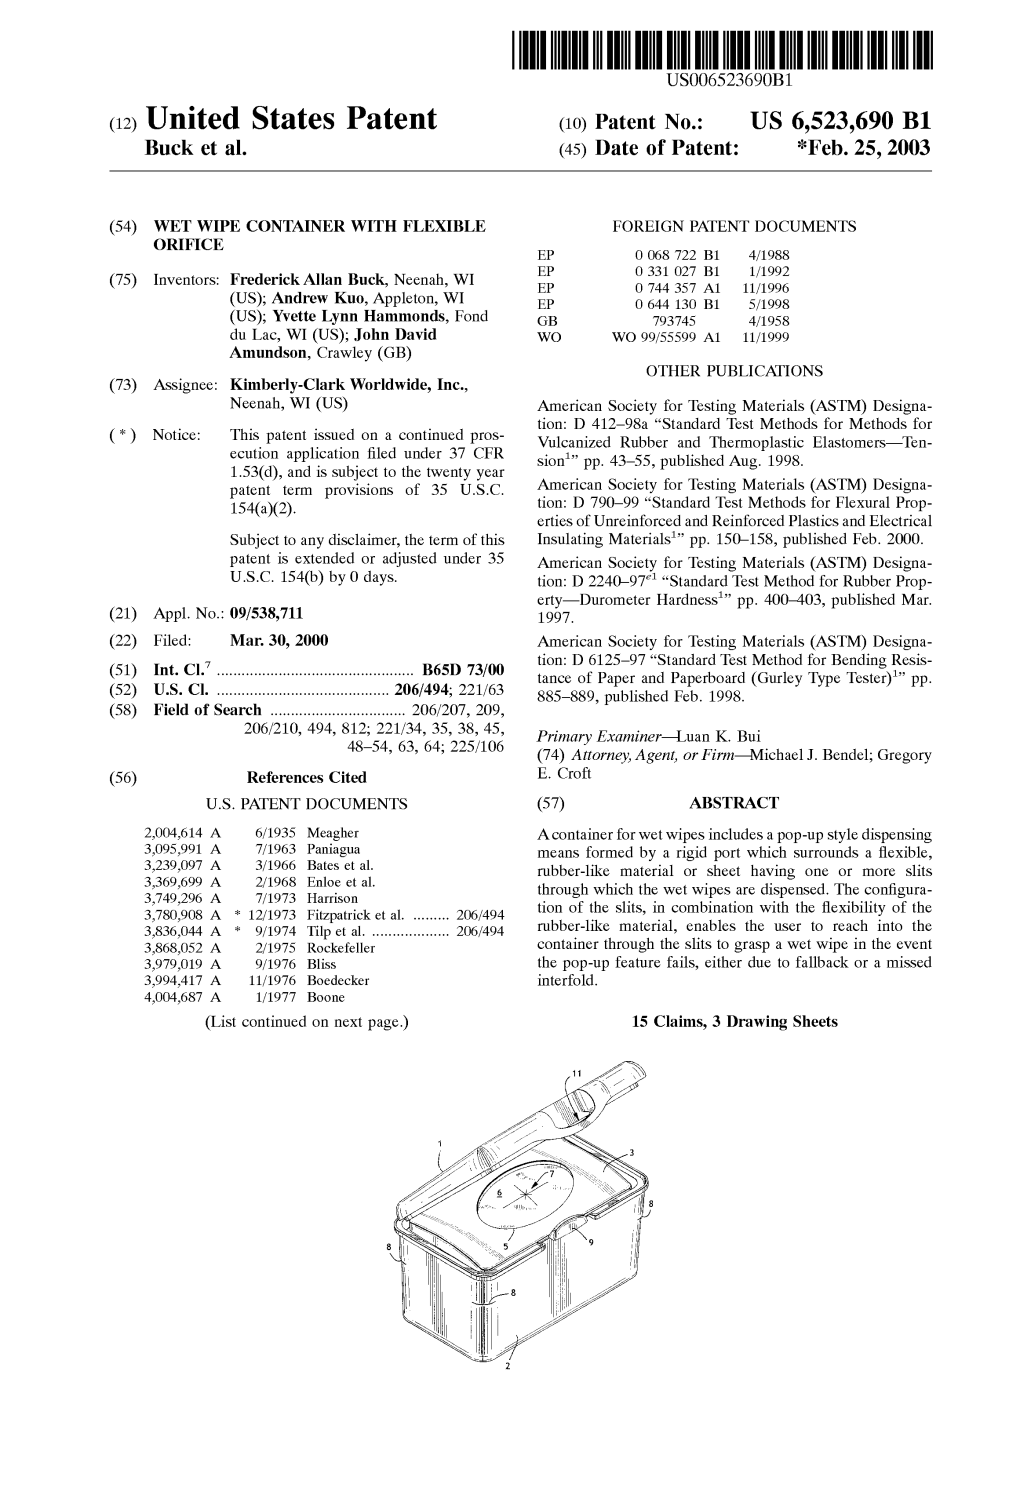 (12) United States Patent (10) Patent No.: US 6,523,690 B1 Buck Et Al